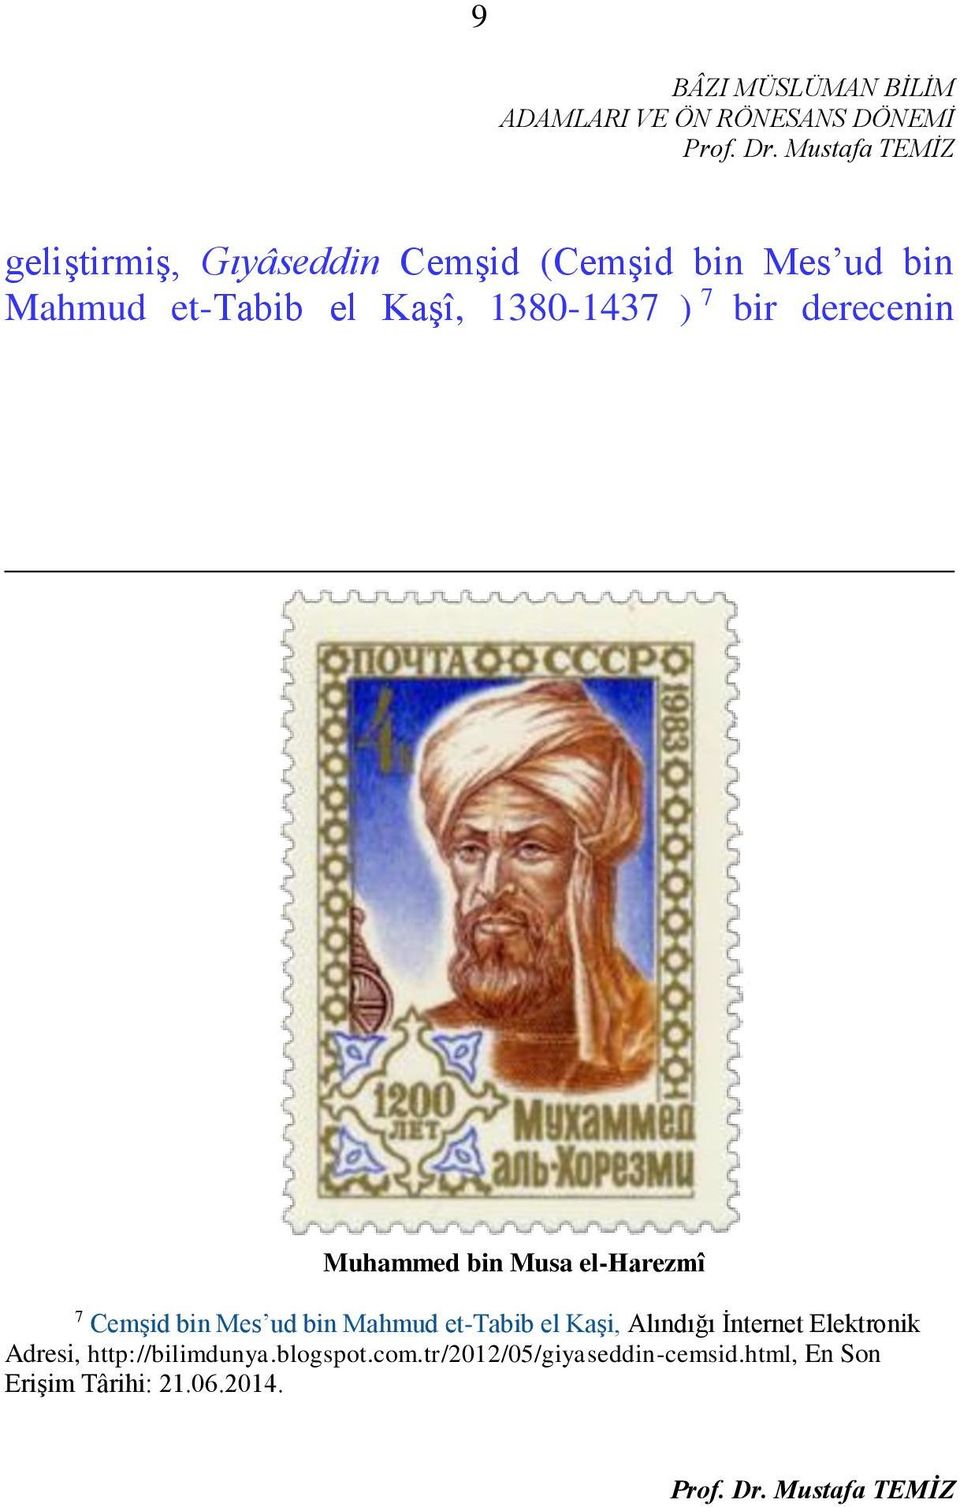 Mahmud et-tabib el Kaşi, Alındığı İnternet Elektronik Adresi, http://bilimdunya.